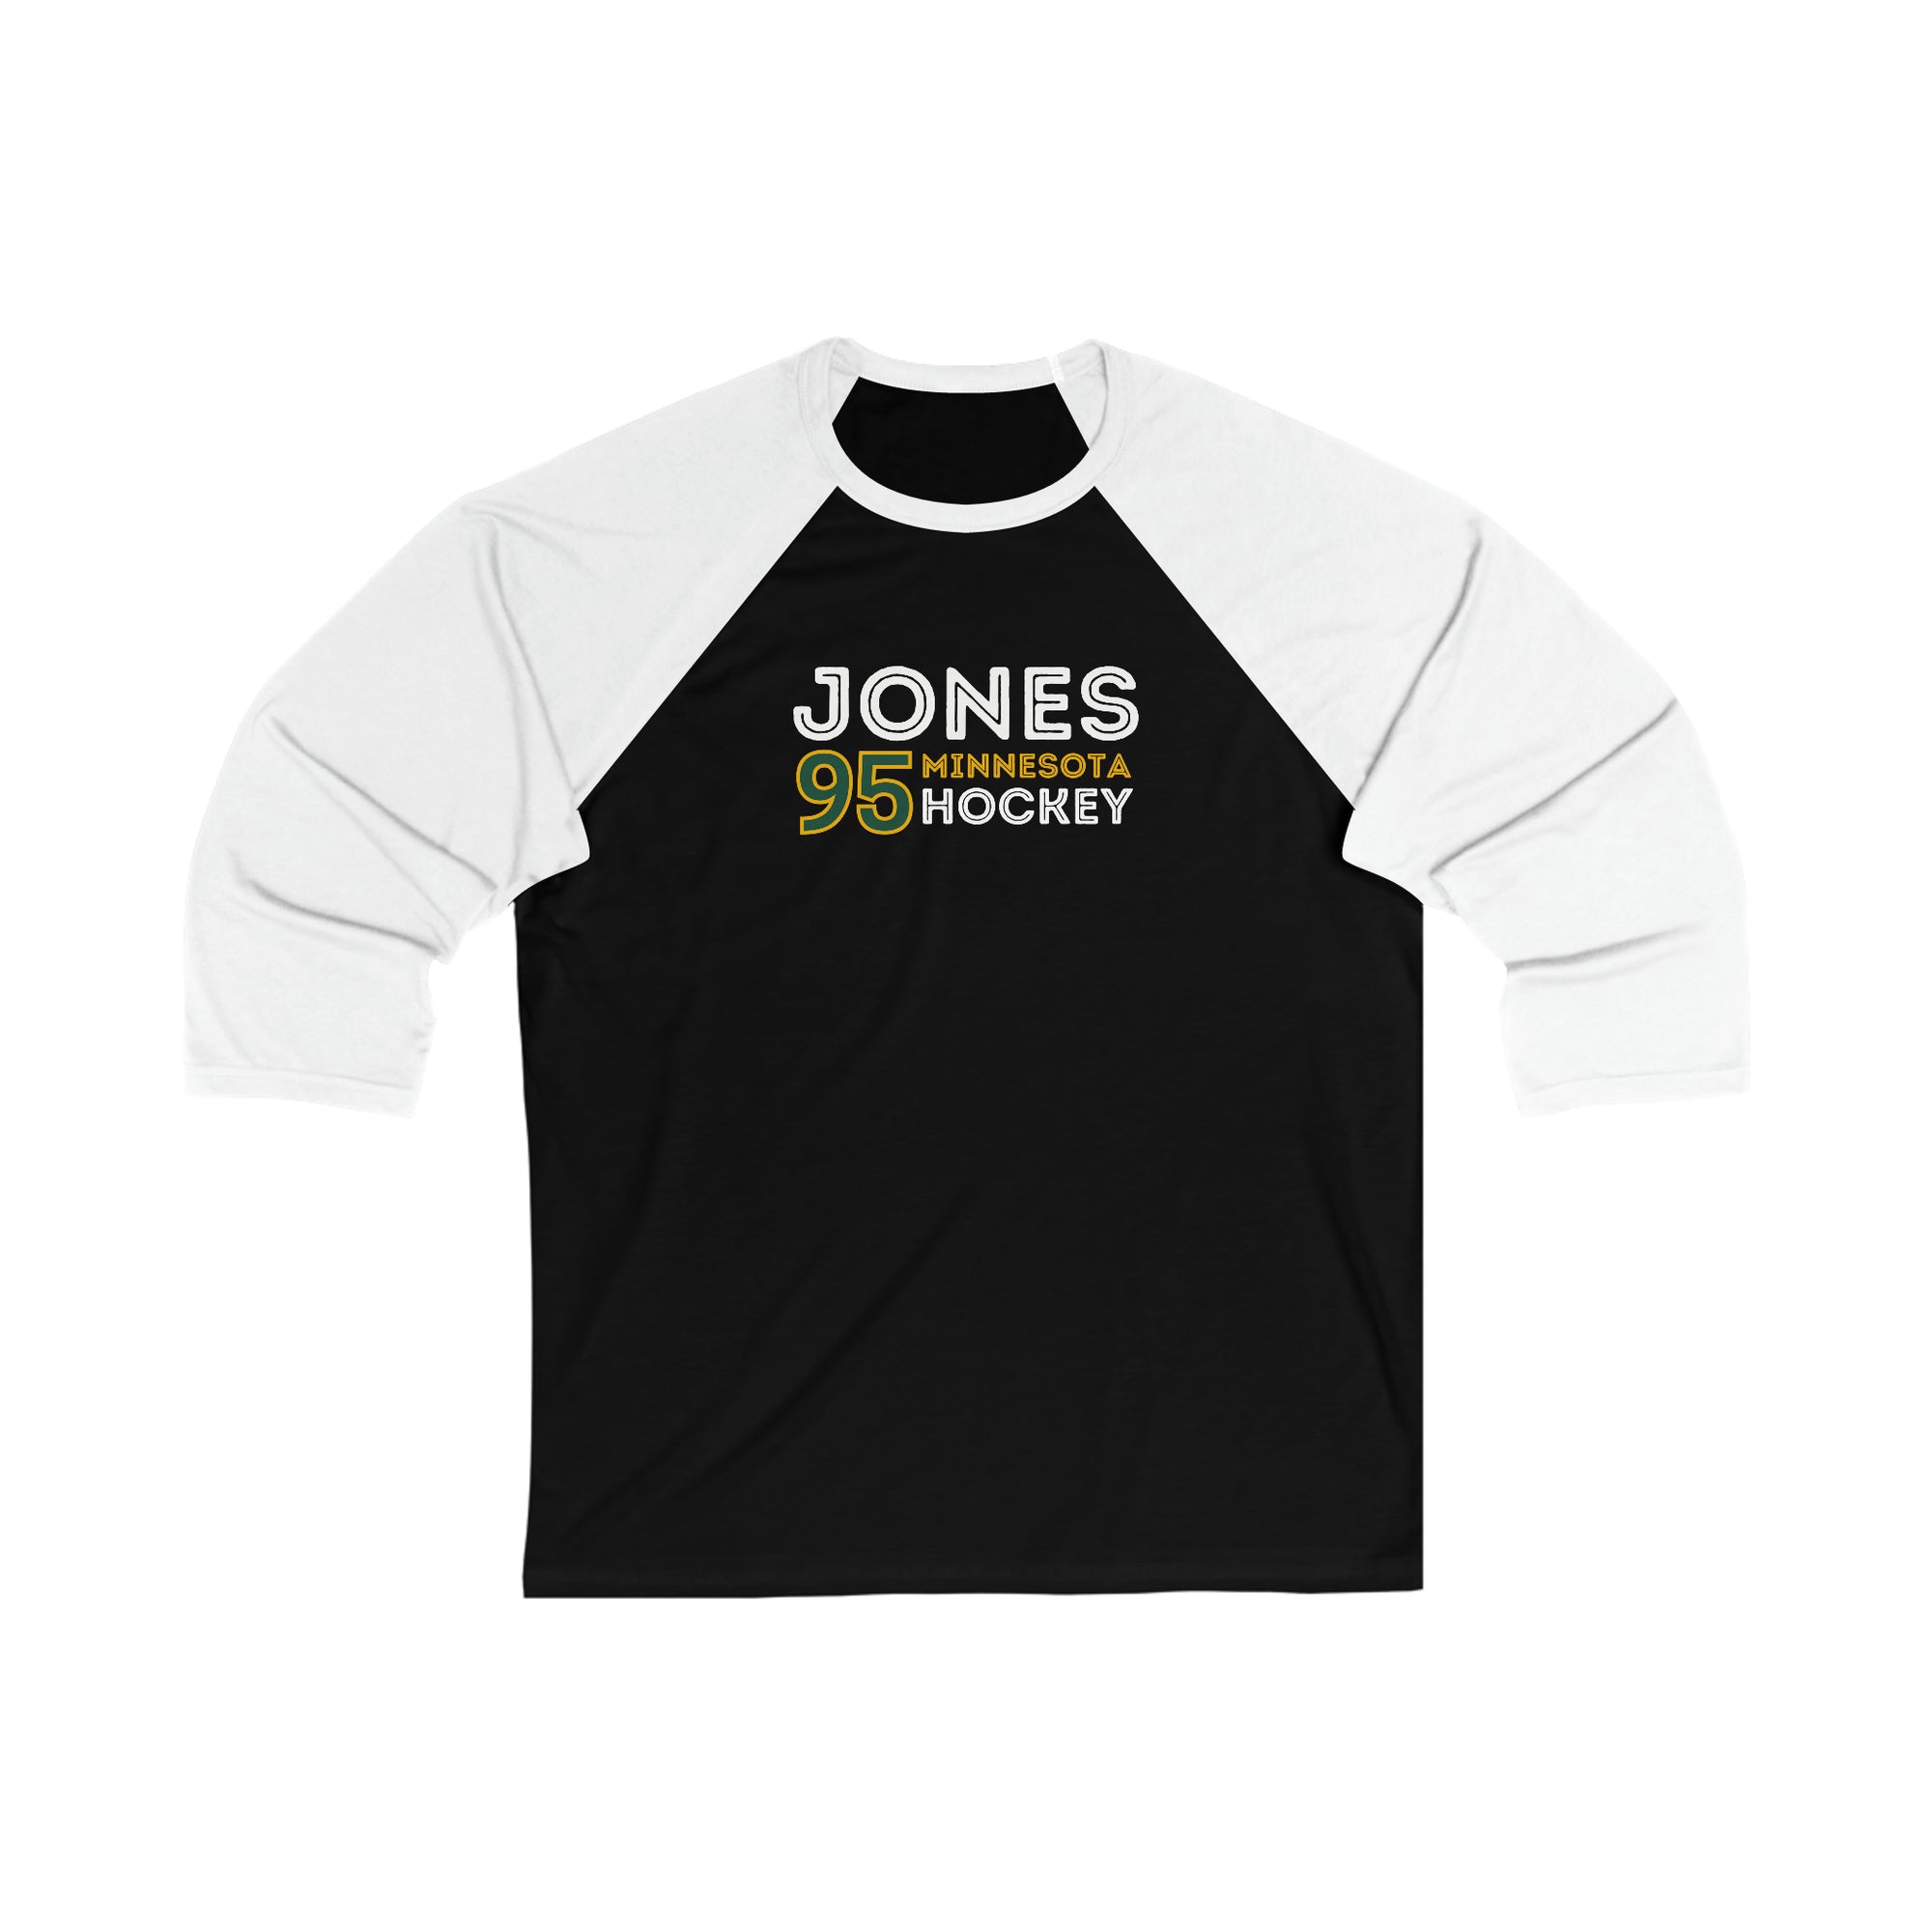 Jones 95 Minnesota Hockey Grafitti Wall Design Unisex Tri-Blend 3/4 Sleeve Raglan Baseball Shirt